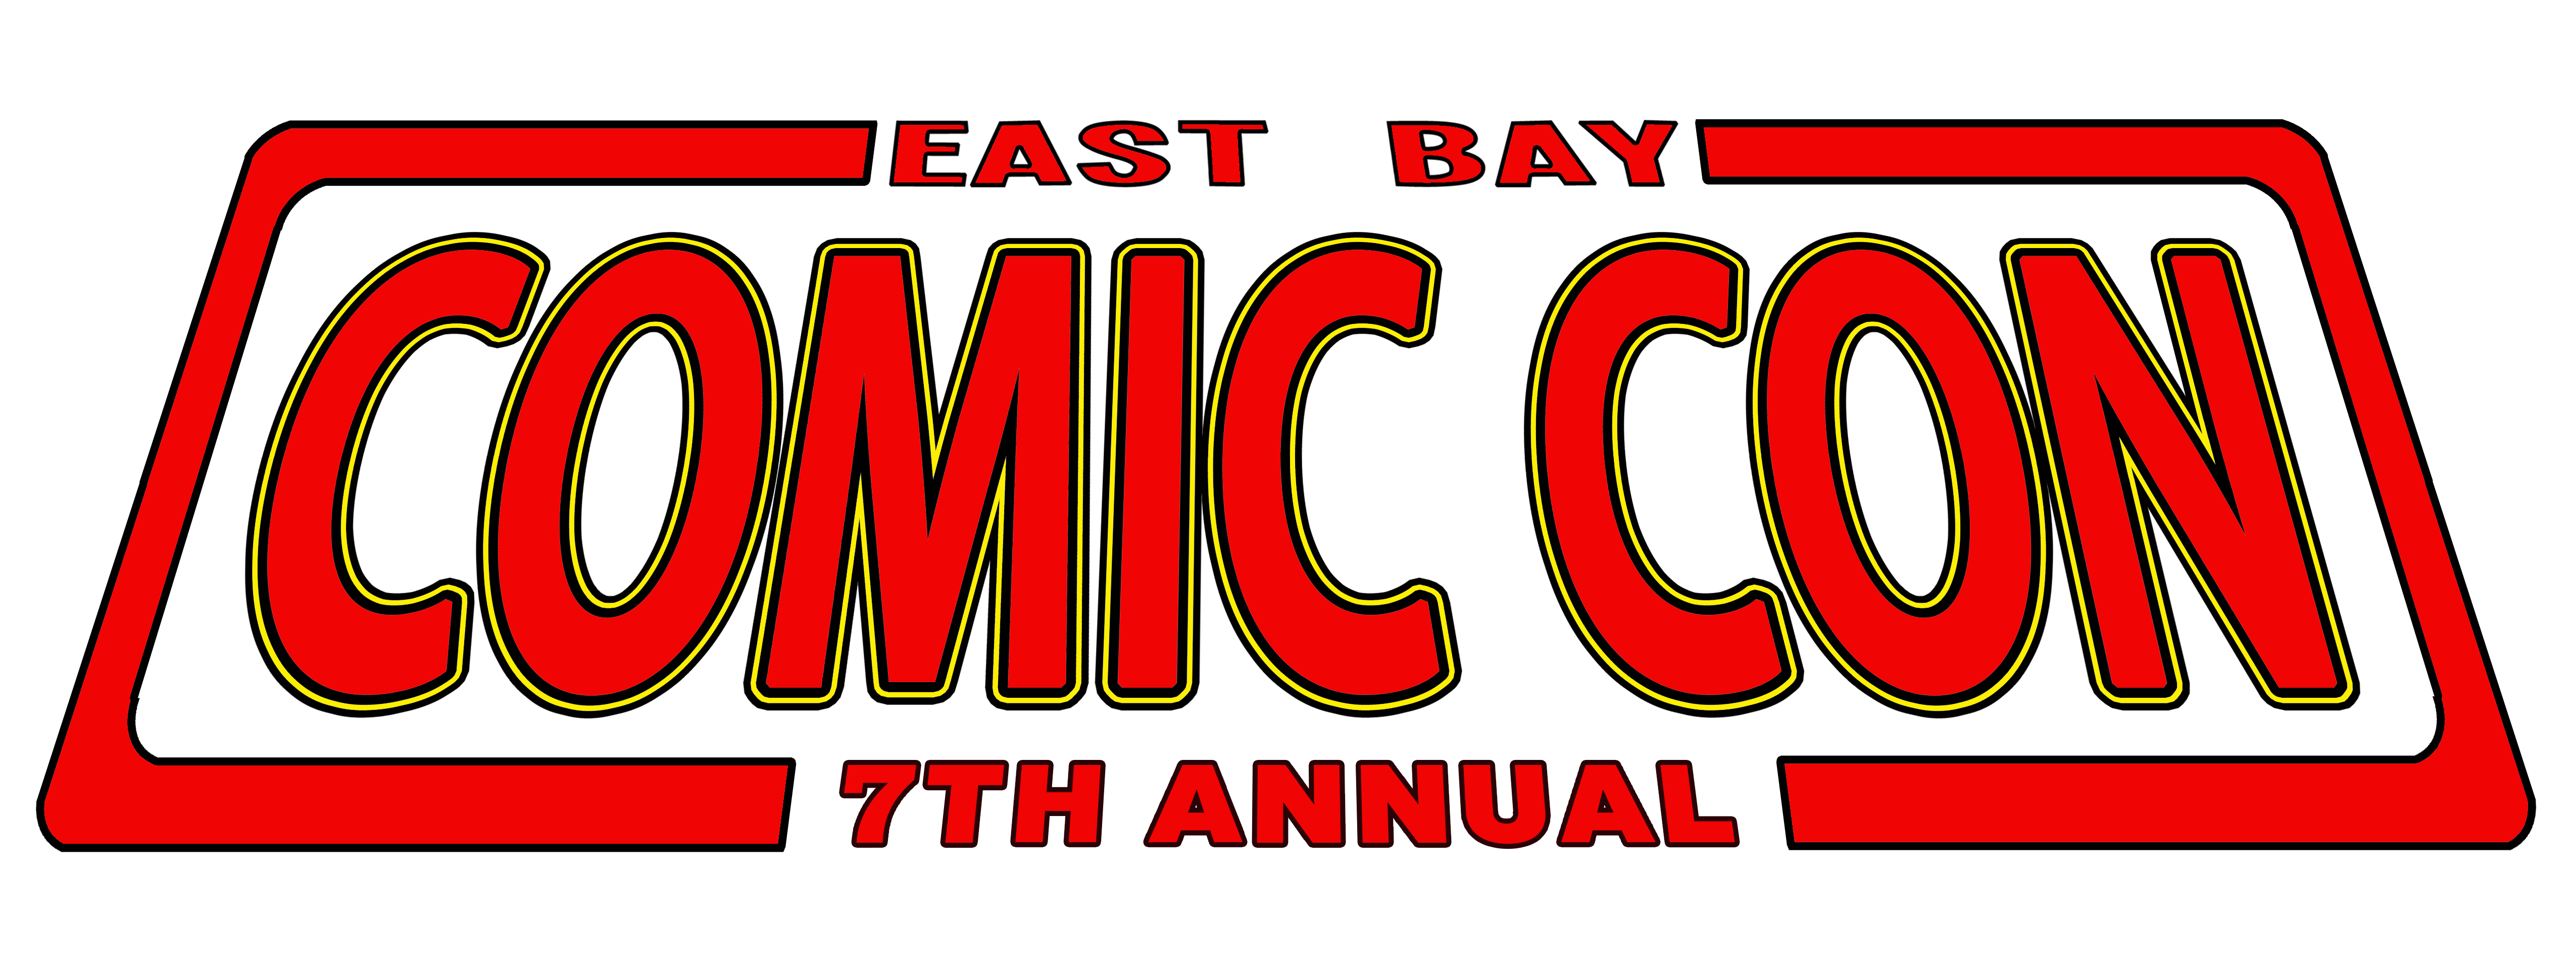 East Bay Comic Con Comic Book And Fantasy Shows